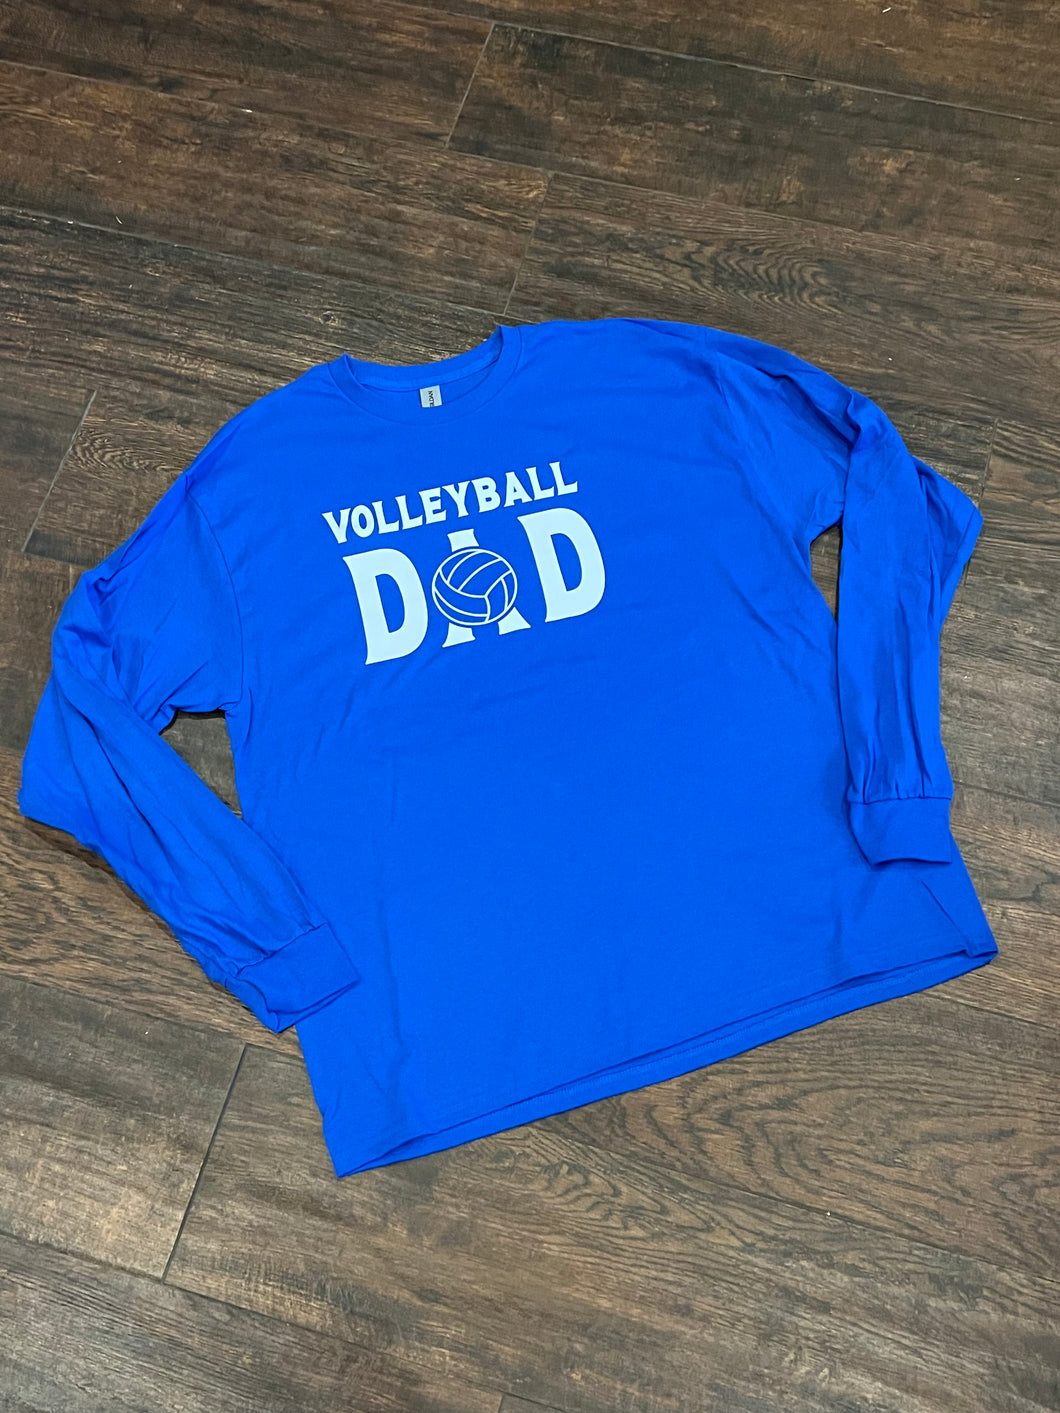 Volleyball Dad Long Sleeved Tee